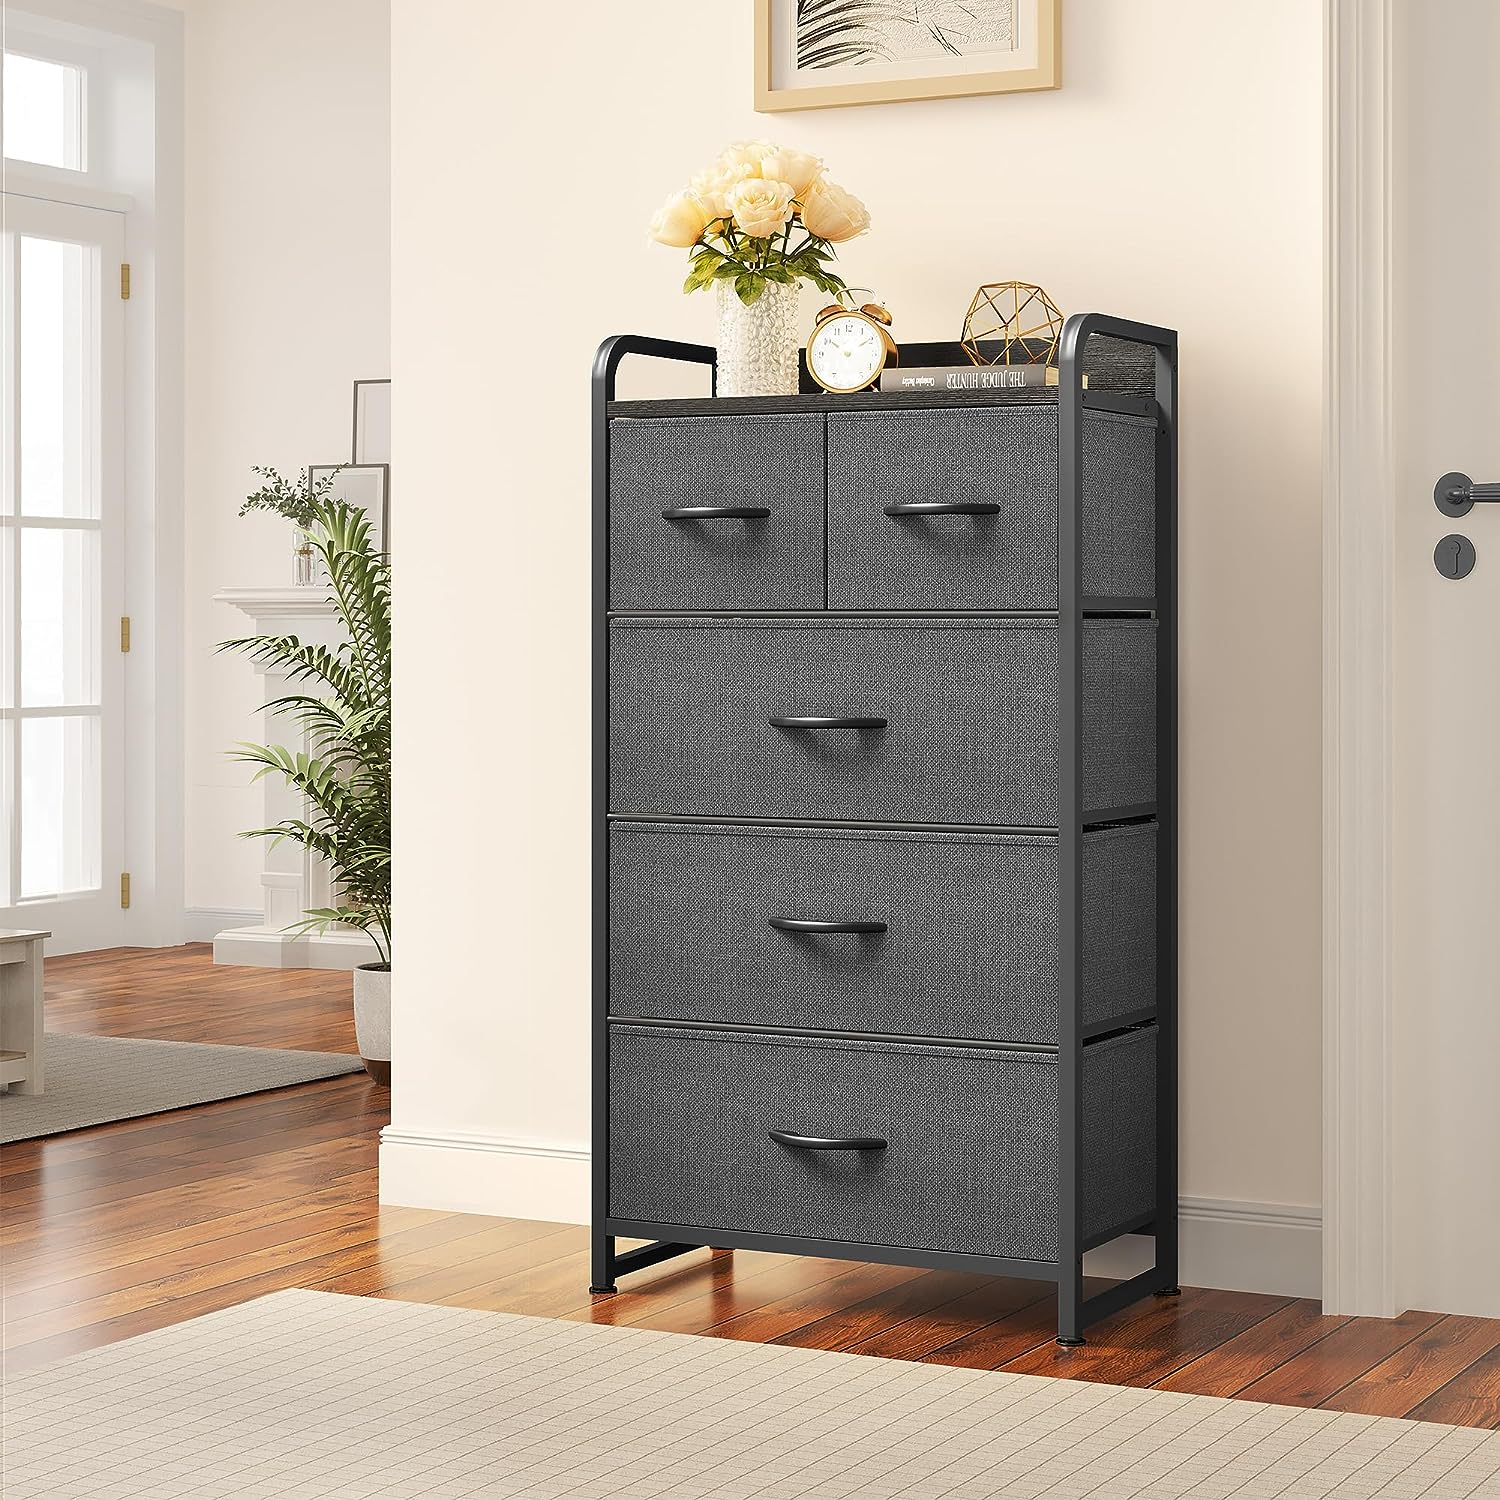 Dresser for Bedroom Storage Drawers Fabric Storage Tower with 5 Drawers,  Chest of Drawers with Fabric Bins